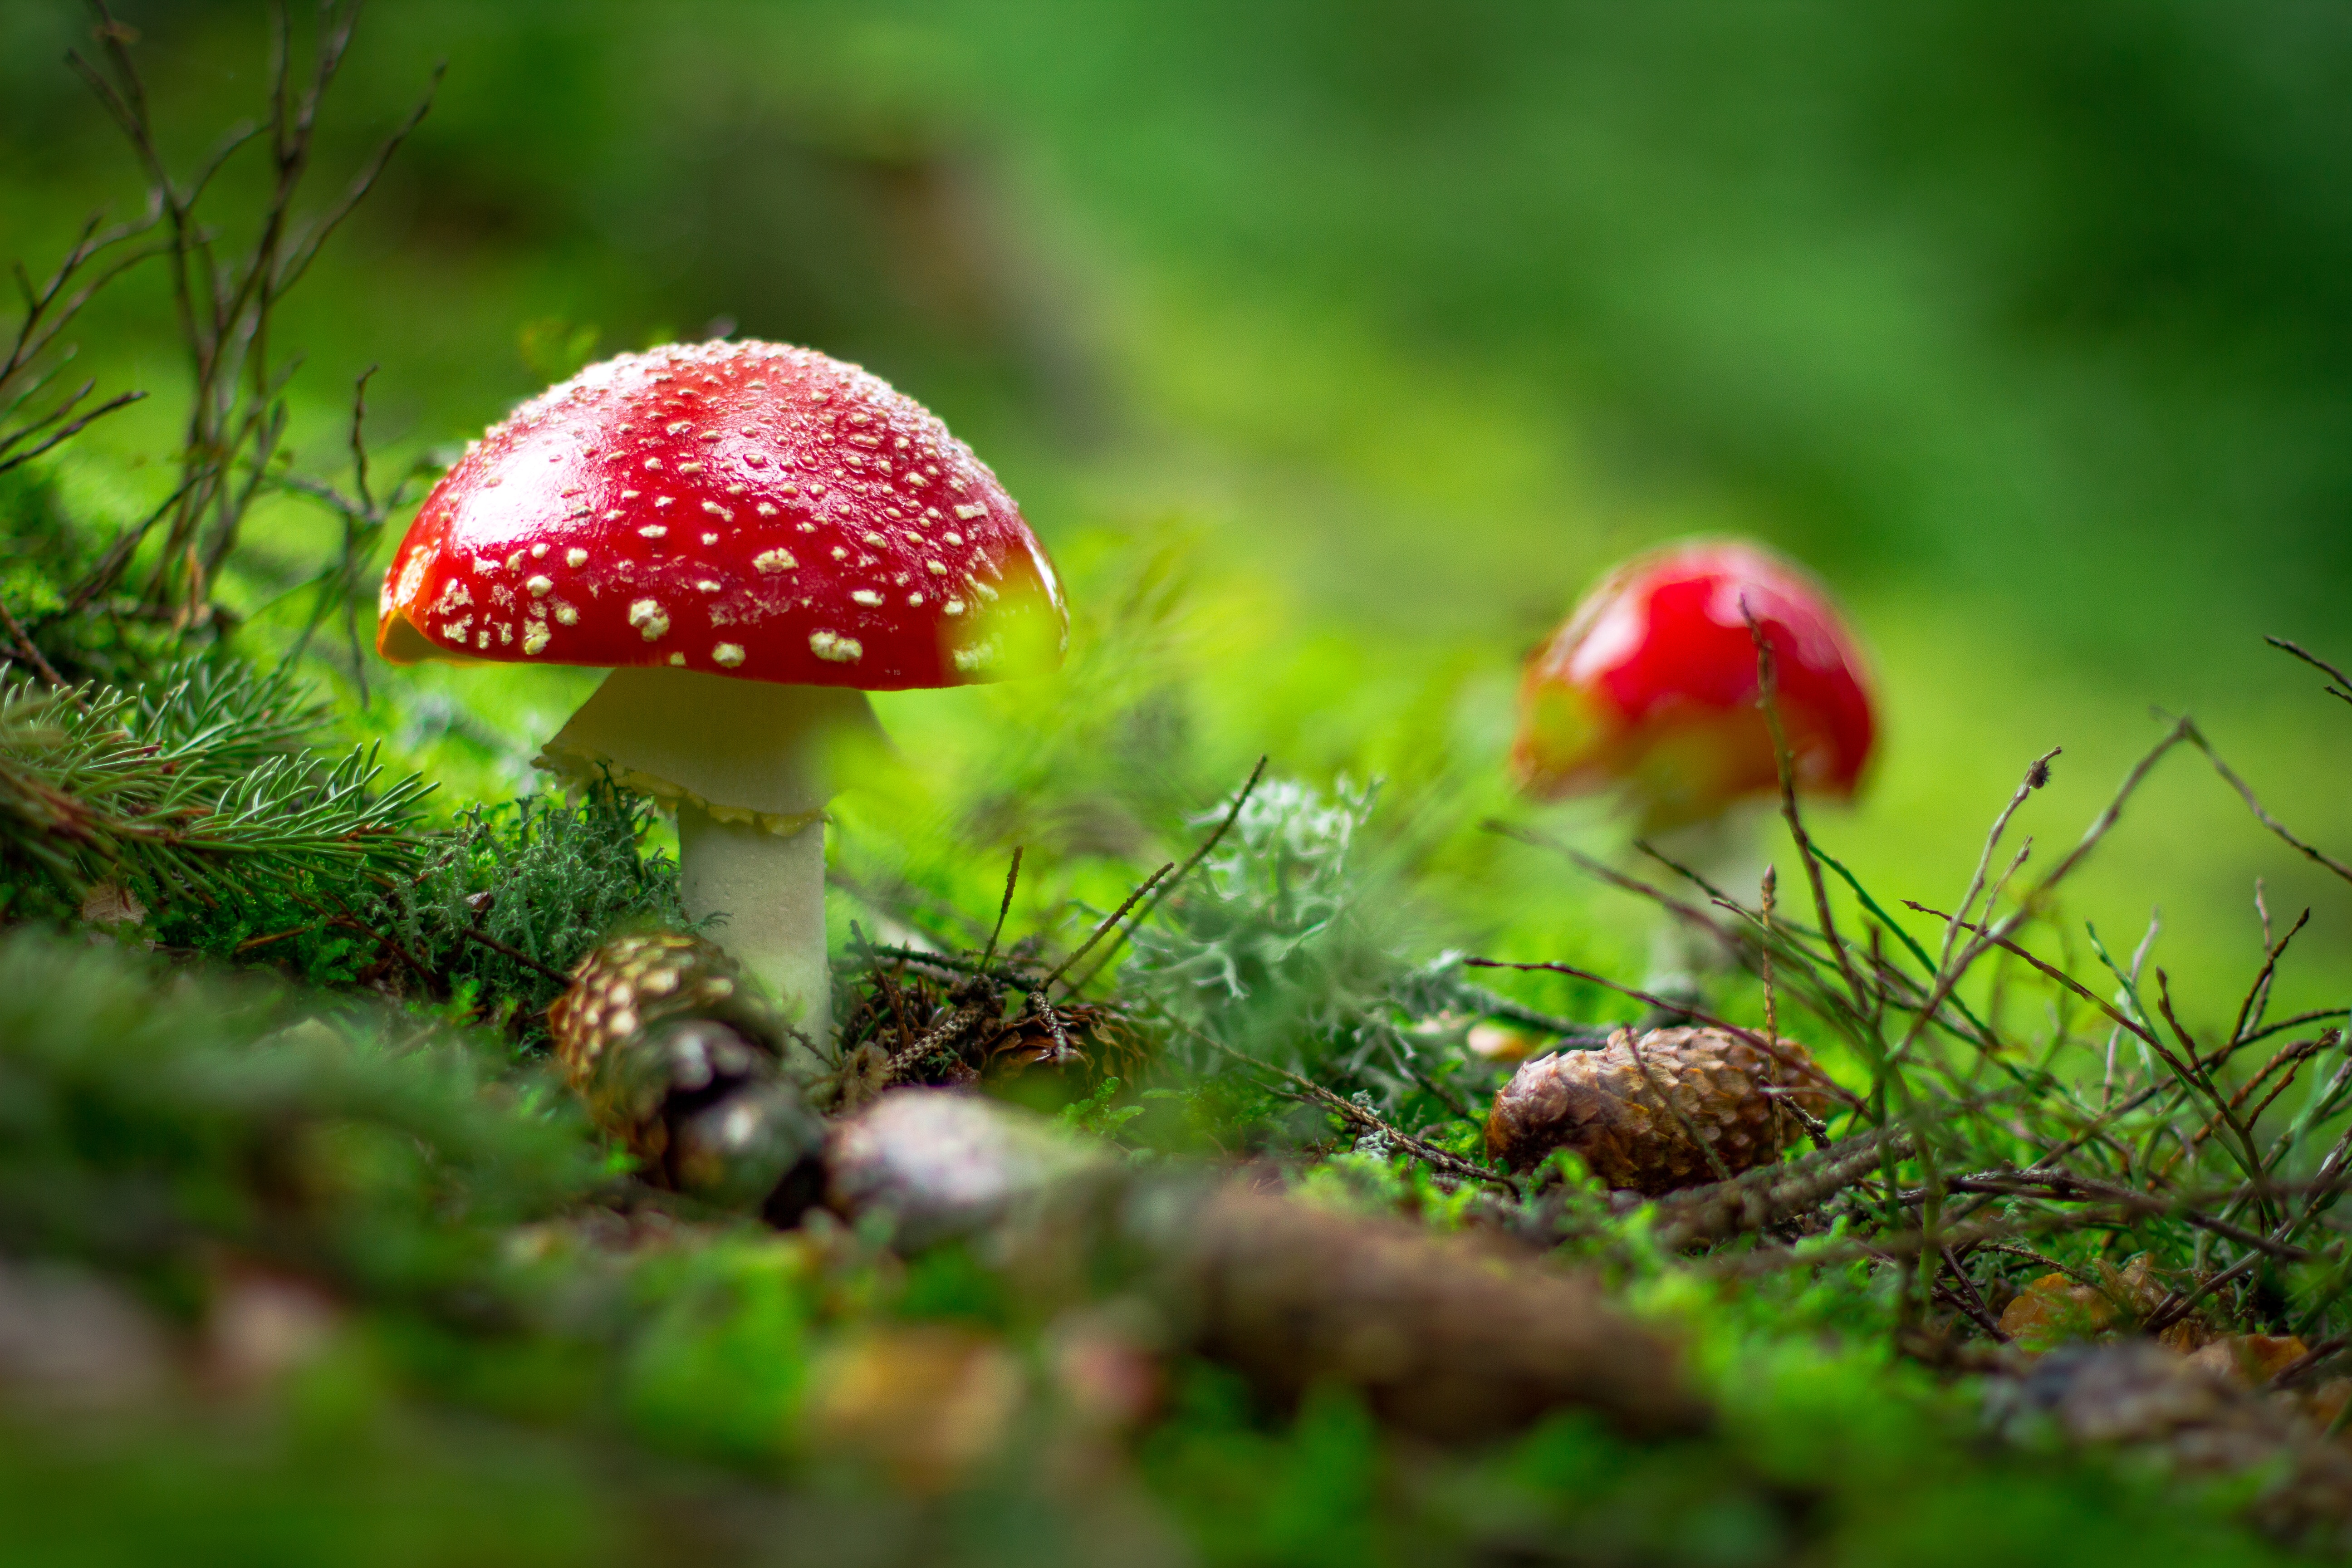 Red mushrooms in a green field.